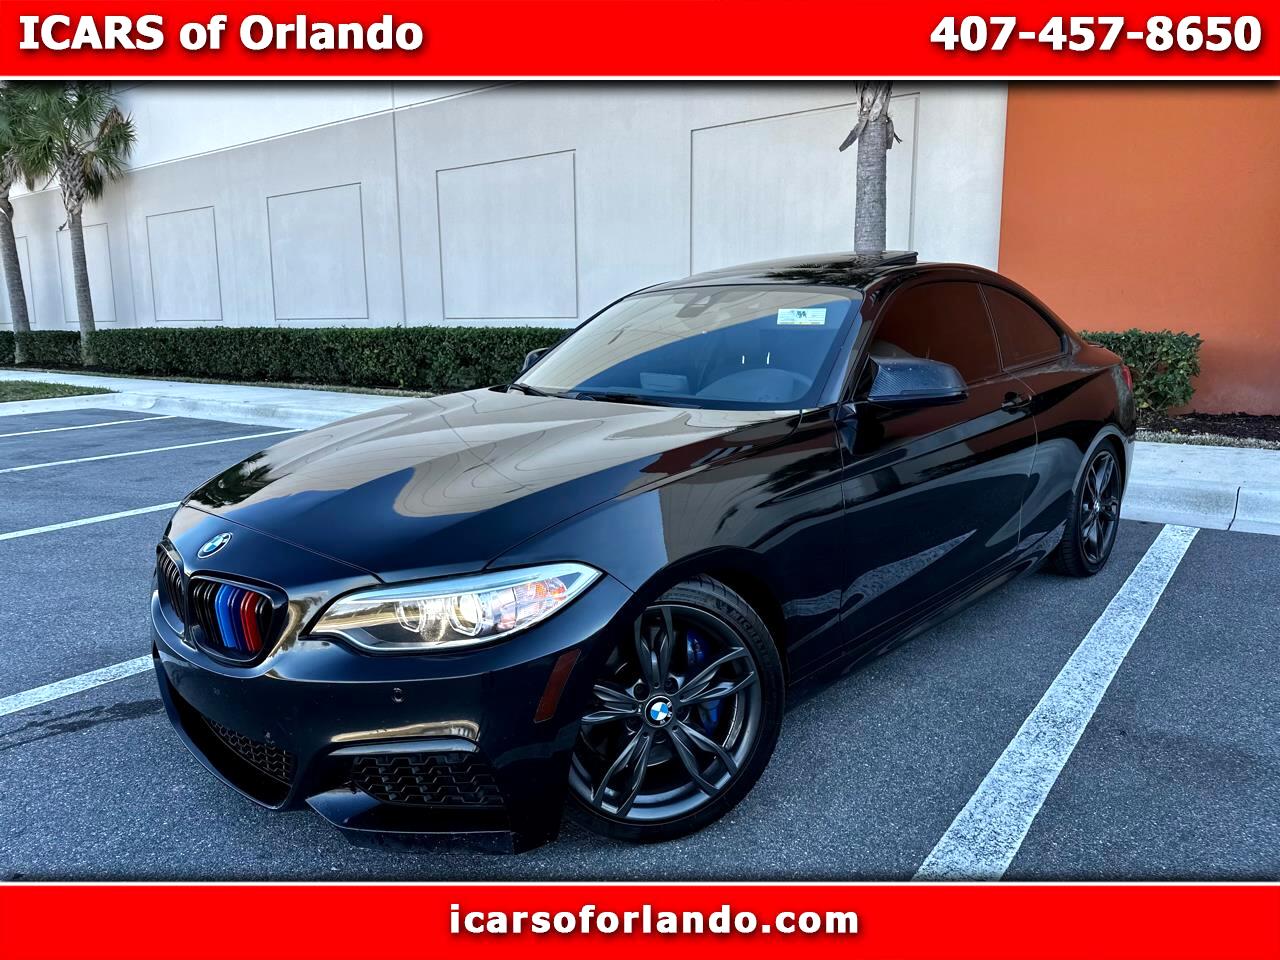 Used Cars for Sale Ocoee FL 34761 ICARS of Orlando